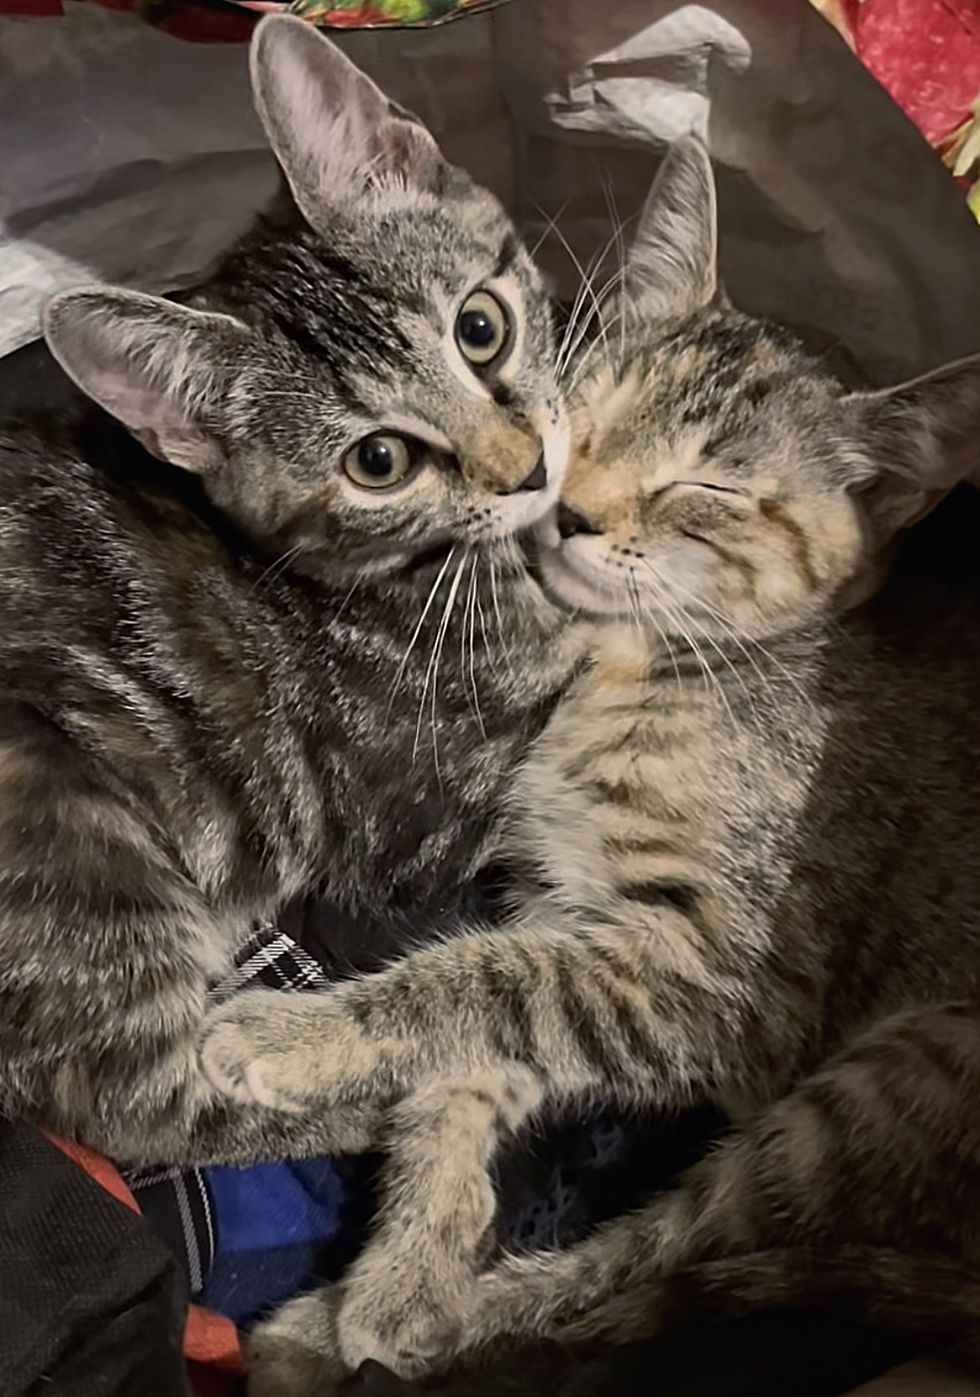 cuddly kittens sweet